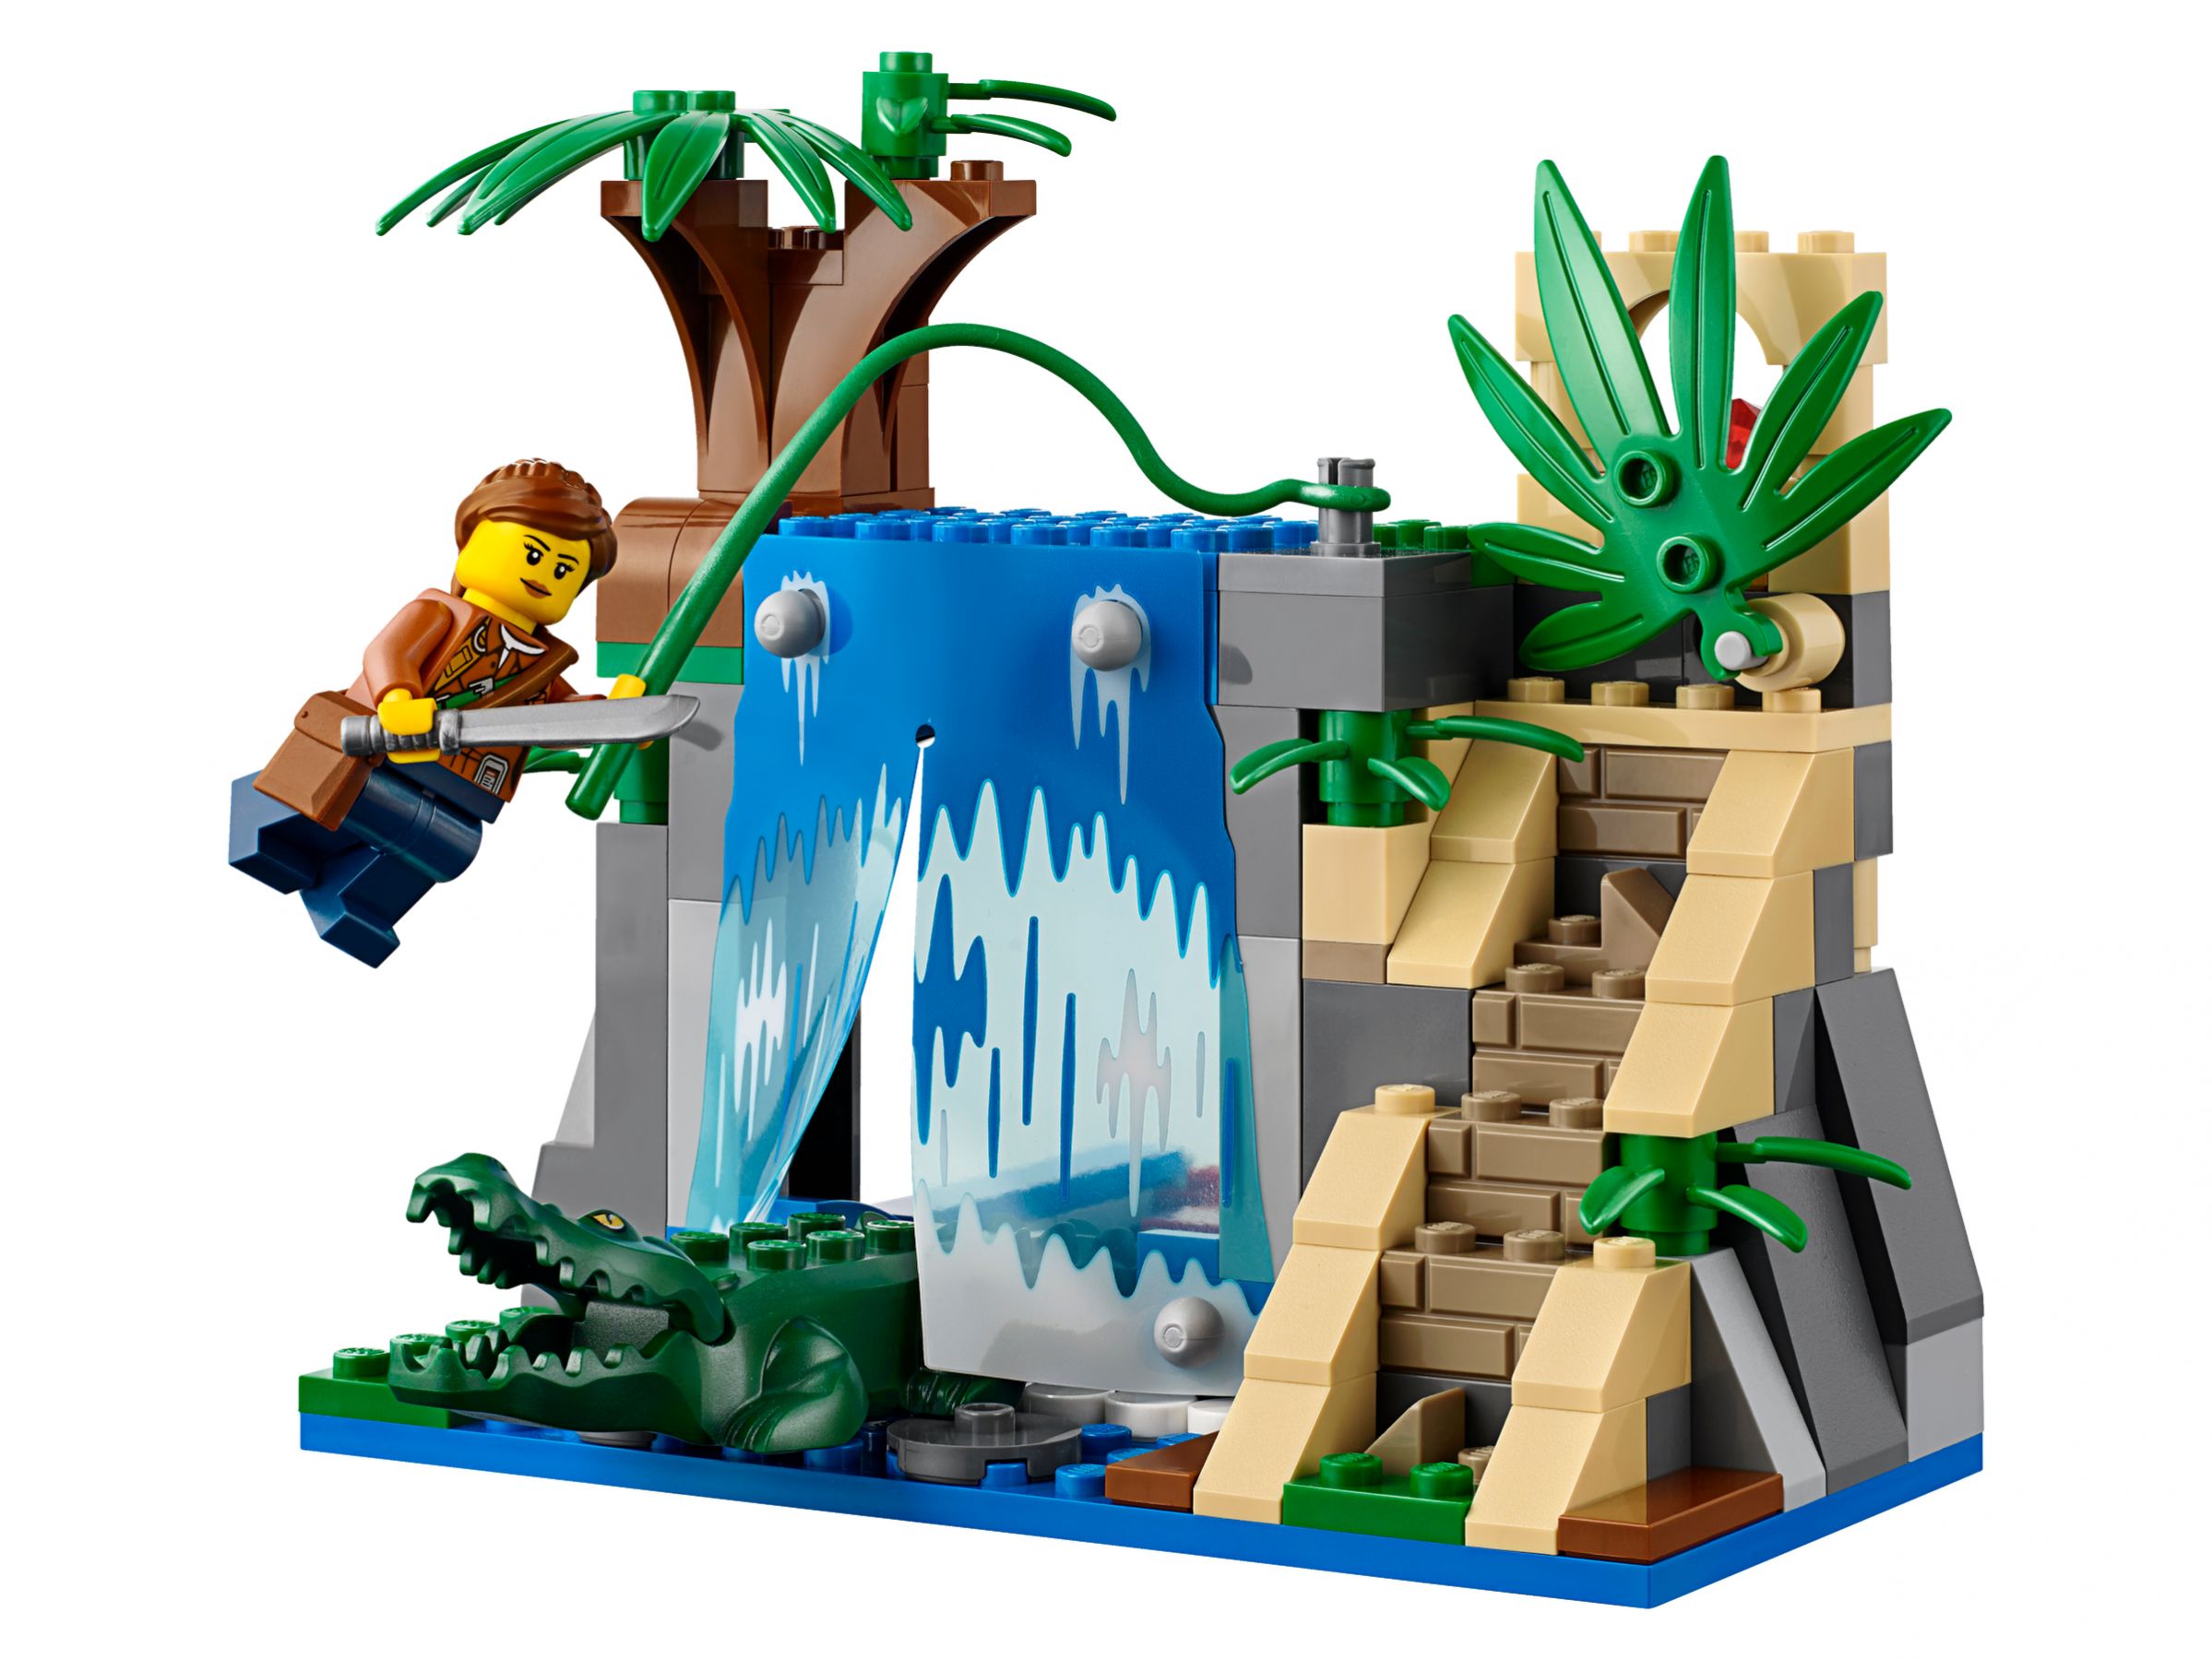 LEGO City 60160 Mobiles Dschungel-Labor LEGO_60160_alt5.jpg